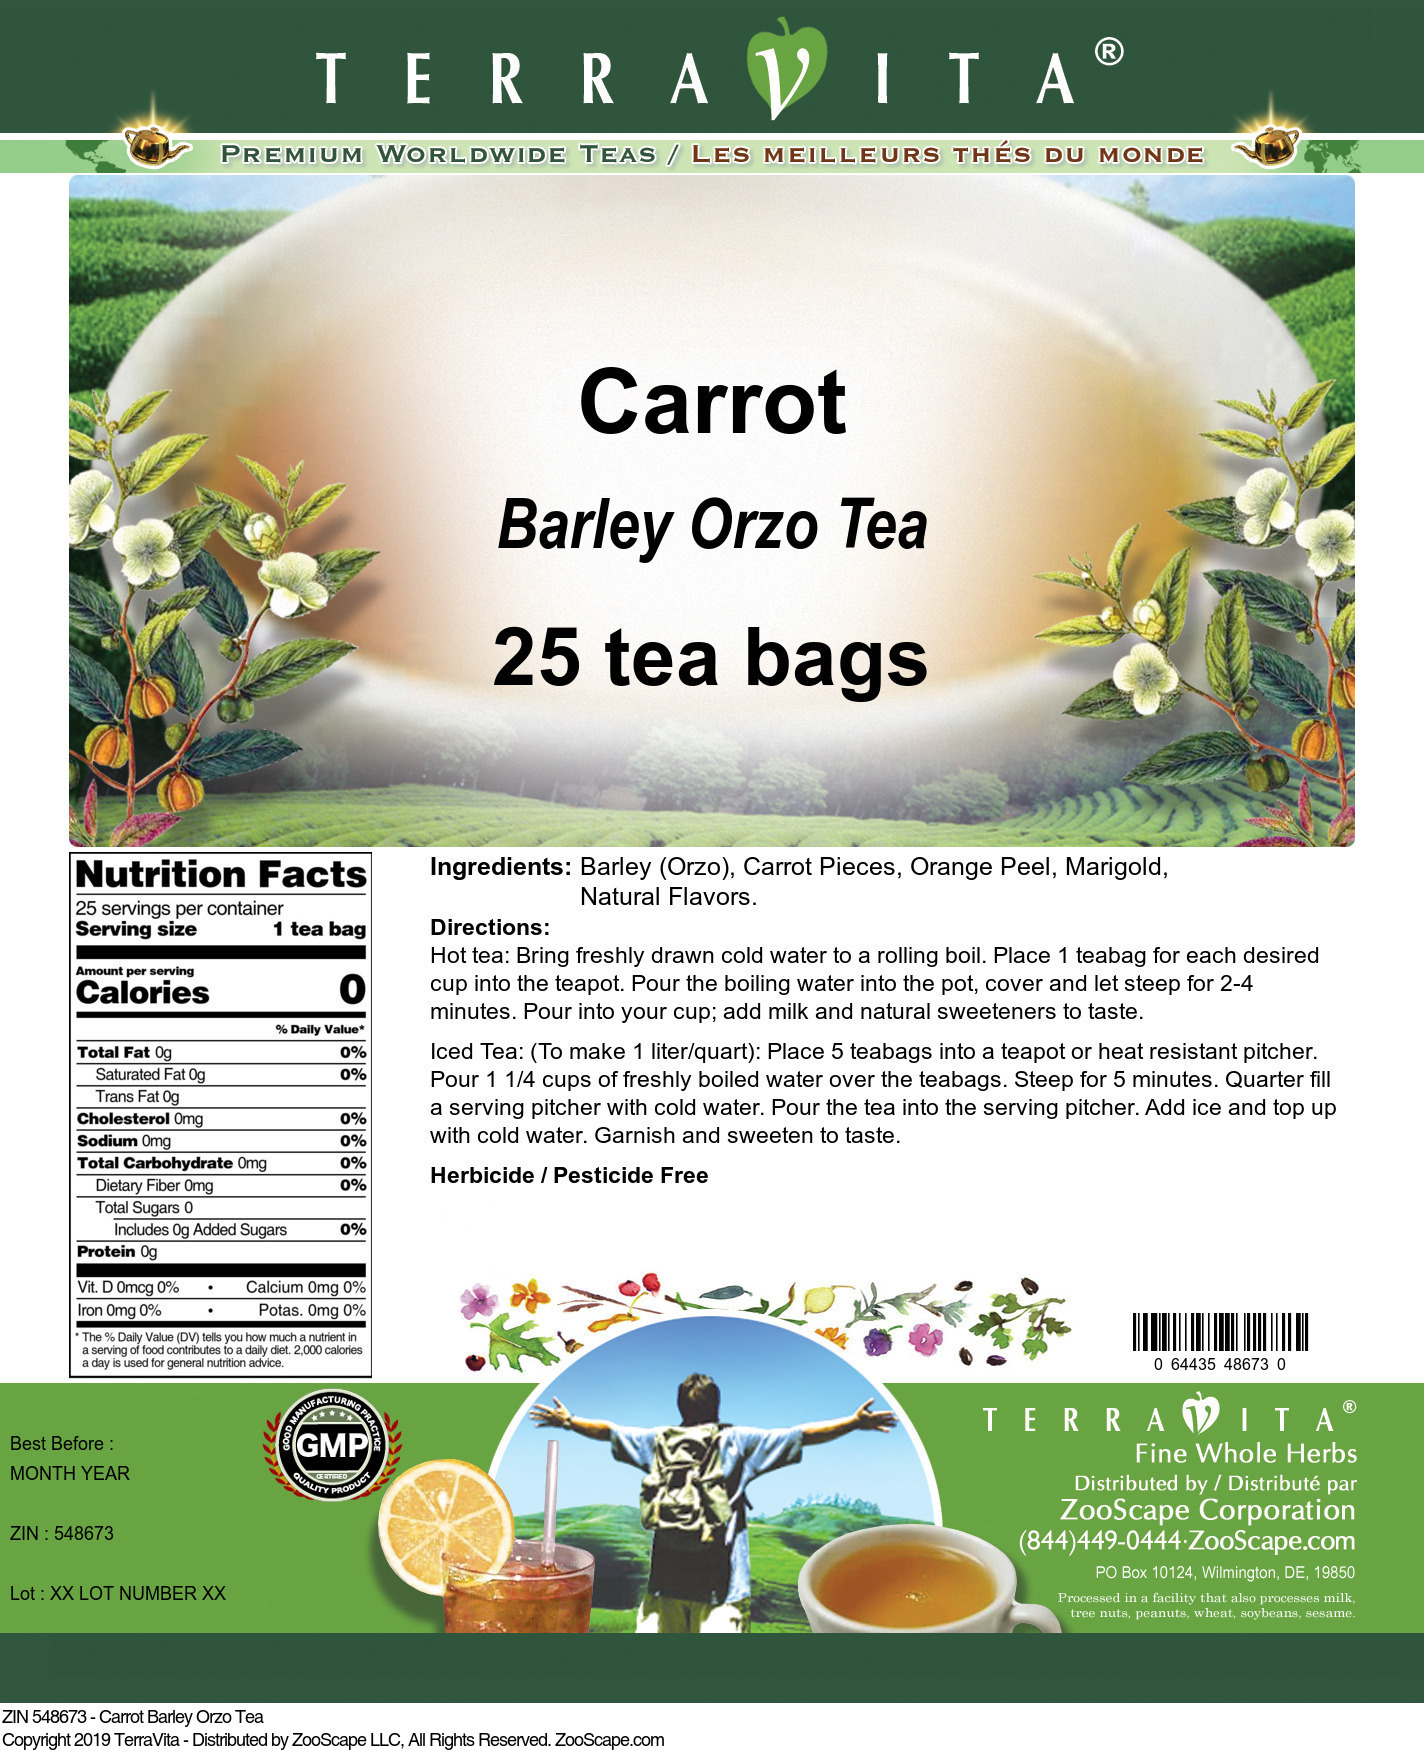 Carrot Barley Orzo Tea - Label